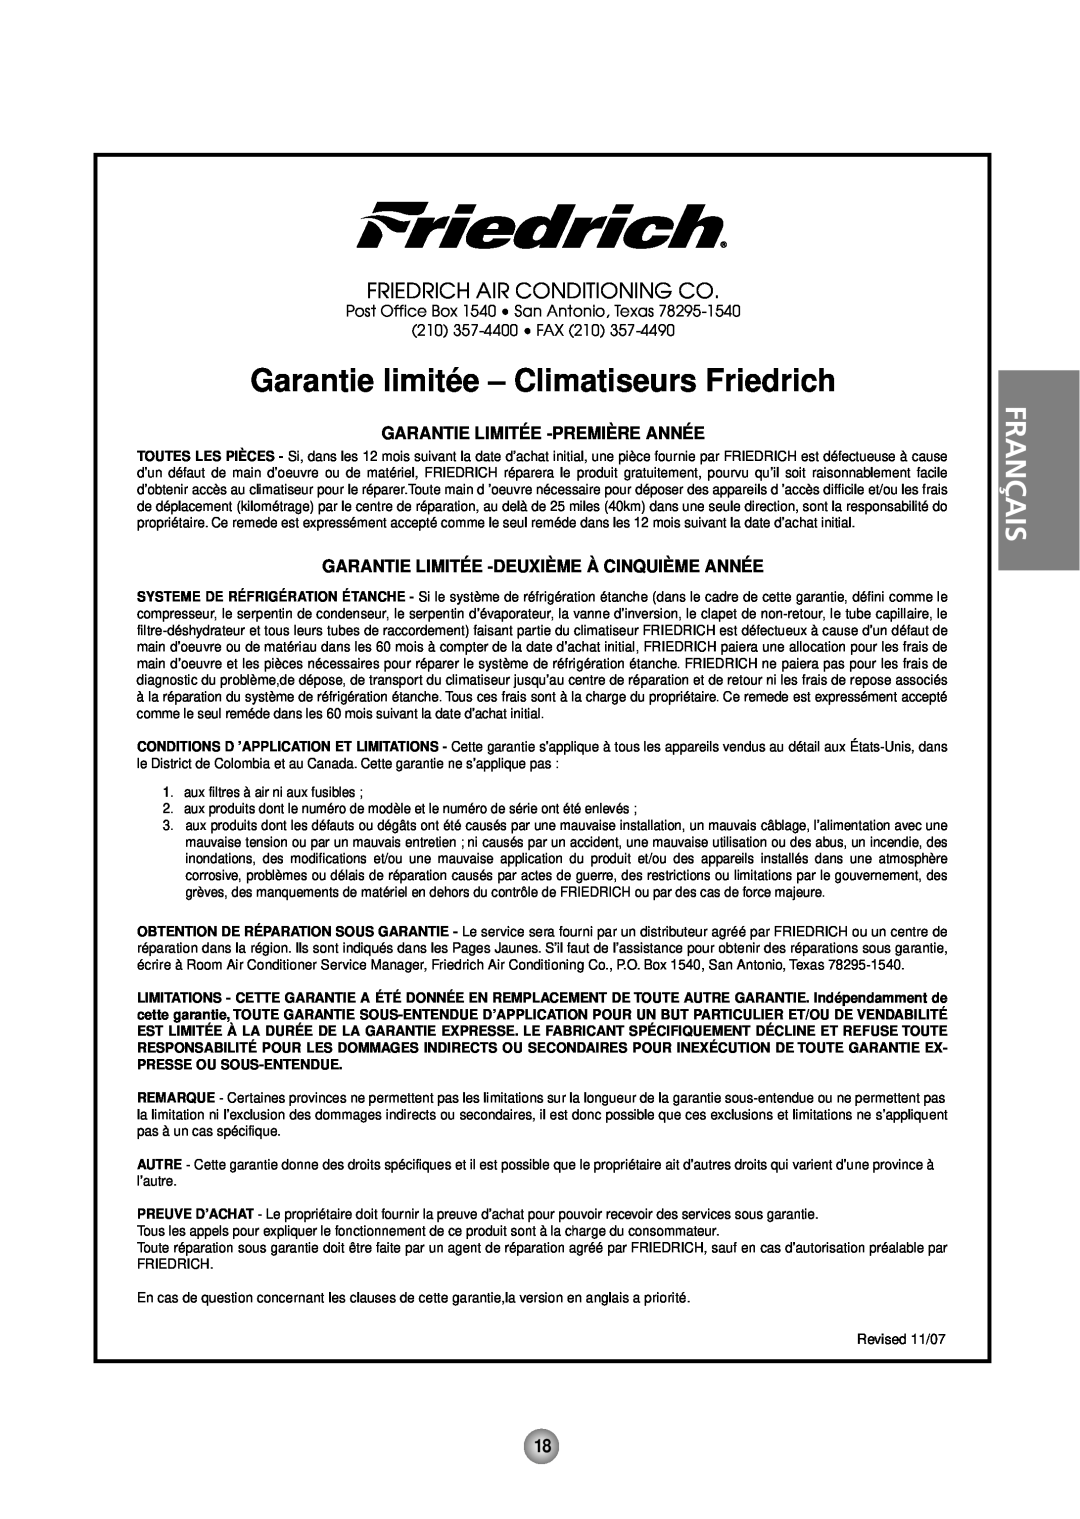 Friedrich CP10, CP12 manual Garantie limitée - Climatiseurs Friedrich, Français, Garantie Limitée -Première Année 